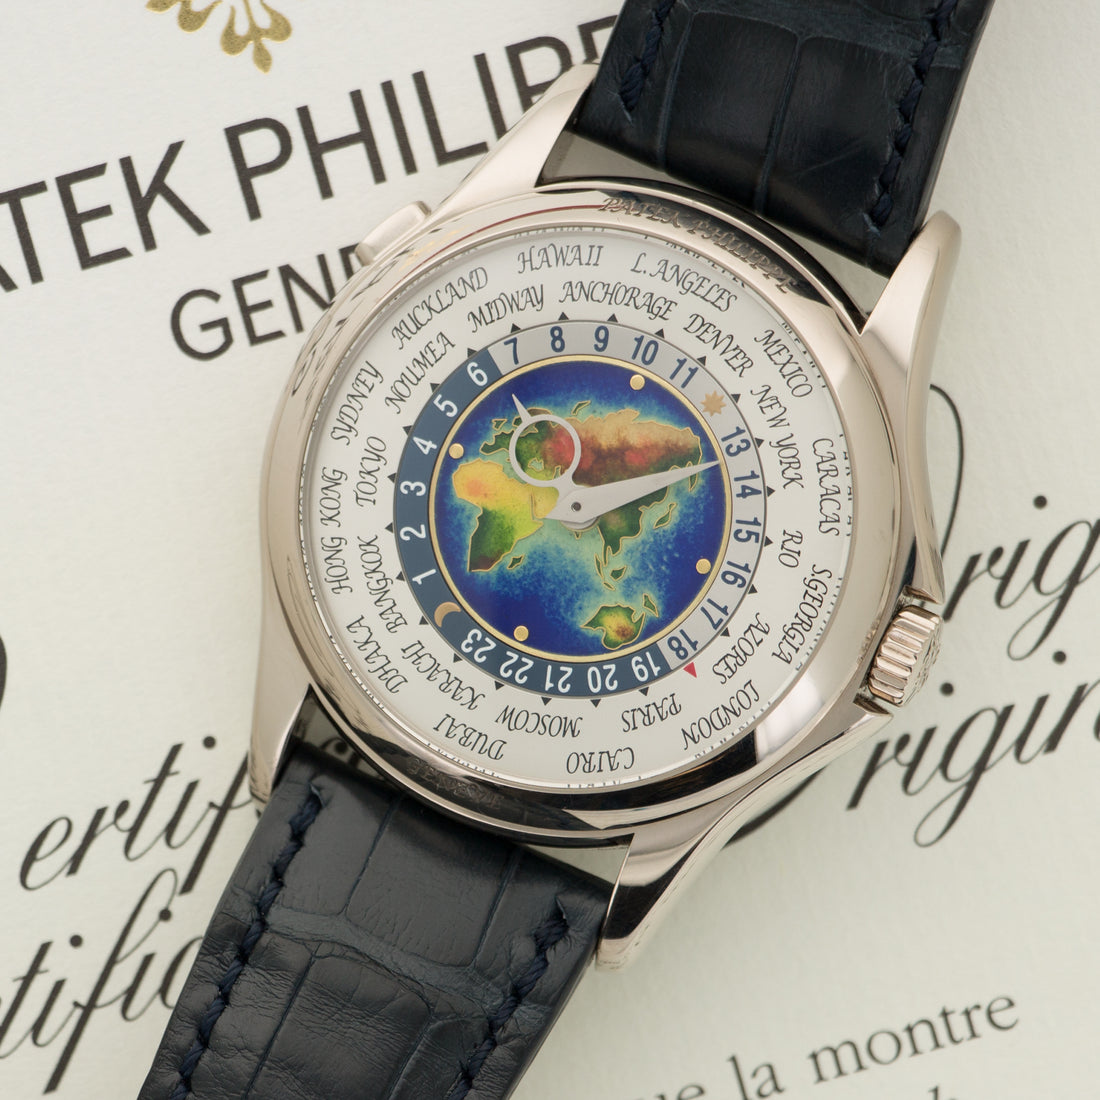 Patek Philippe White Gold World Time Cloisonne Watch Ref. 5131G